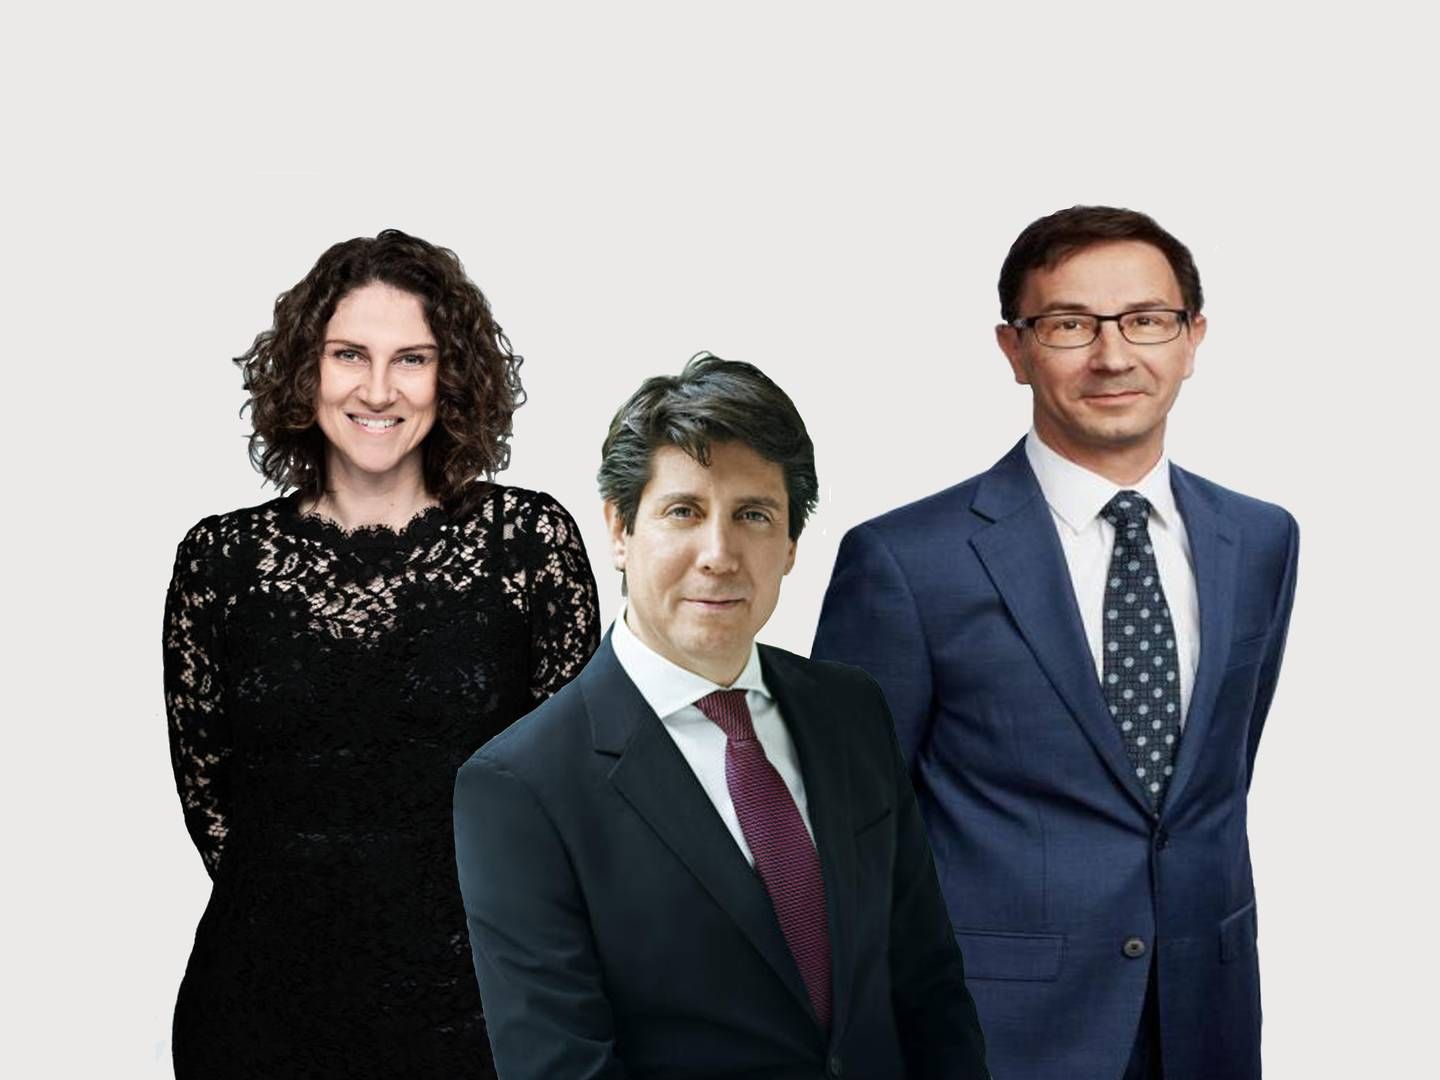 From left to right: Gitte Aabo, CEO, GN Hearing, Juan Jose Gonzalez, former CEO of Ambu, Emmanuel Dulac, former CEO of Zealand Pharma | Photo: Foto: GN /PR, Ambu /PR, Zealand Pharma /PR. Collage: Christian Bundgaard